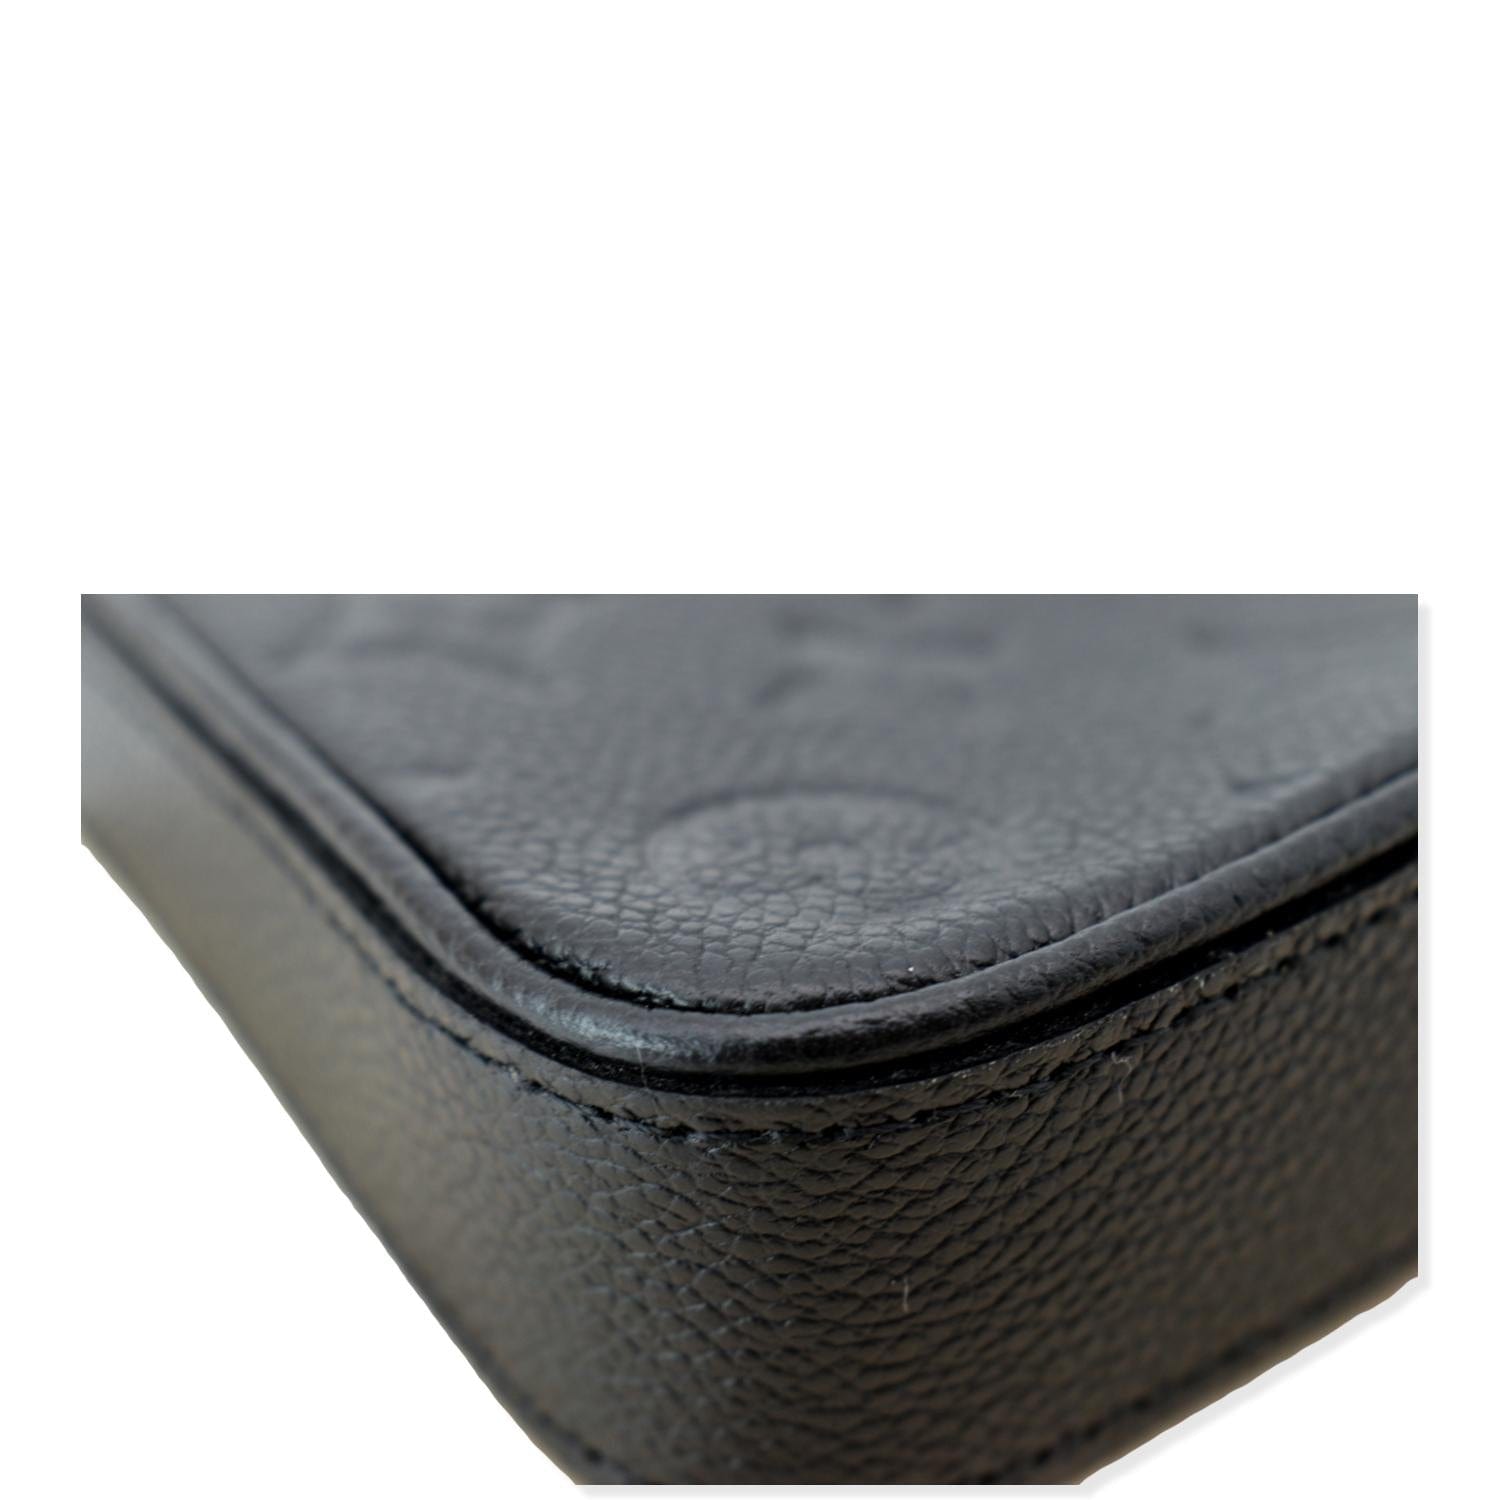 Louis Vuitton Black Monogram Leather Empreinte Easy Pouch on Strap Crossbody